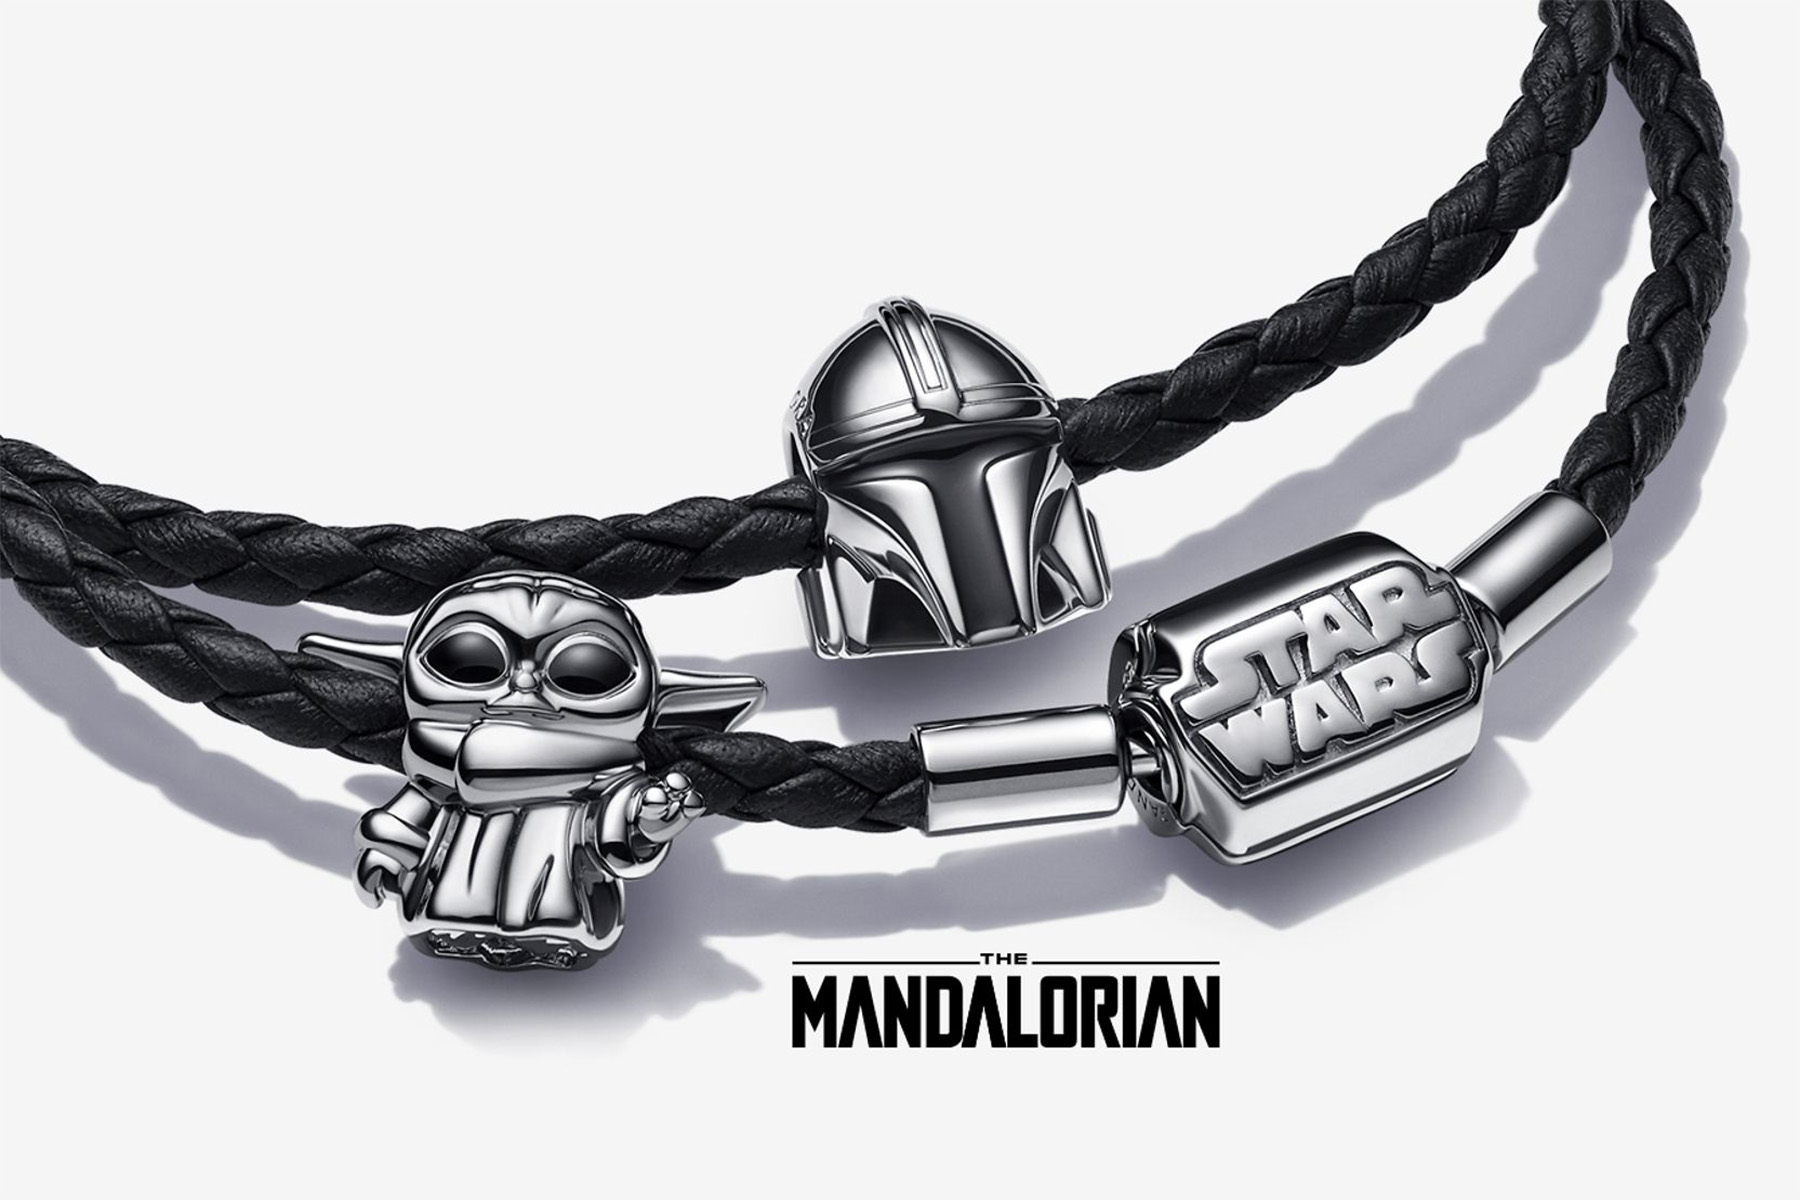 FINAL SALE - Pandora Moments Star Wars™ Limited Edition Clasp Double Black Leather  Bracelet, Ruthenium plated